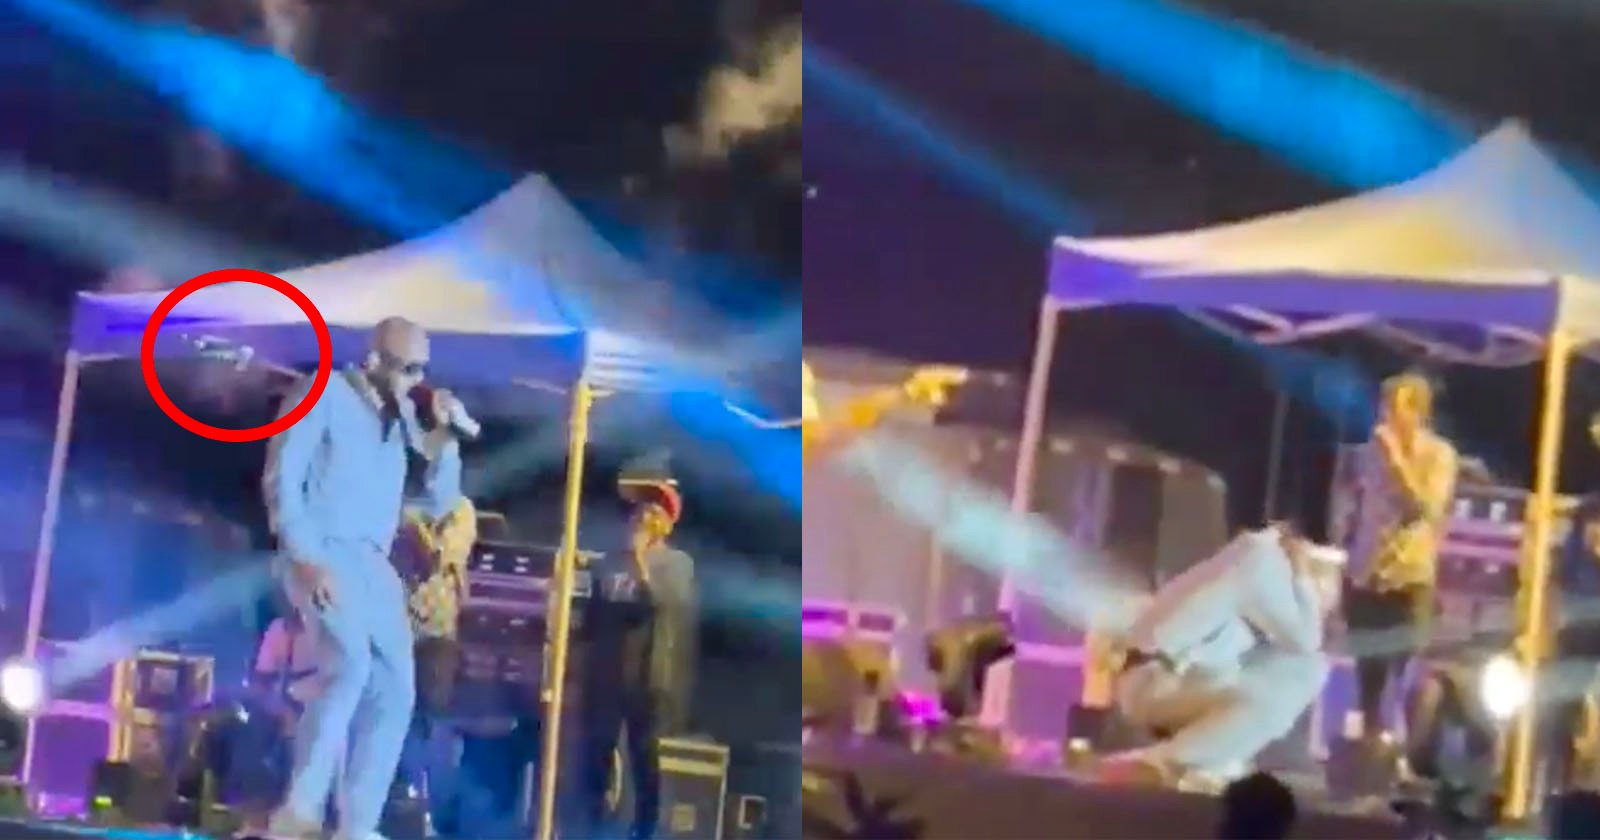 Singer Injured After Being Struck by Drone During Live Concert